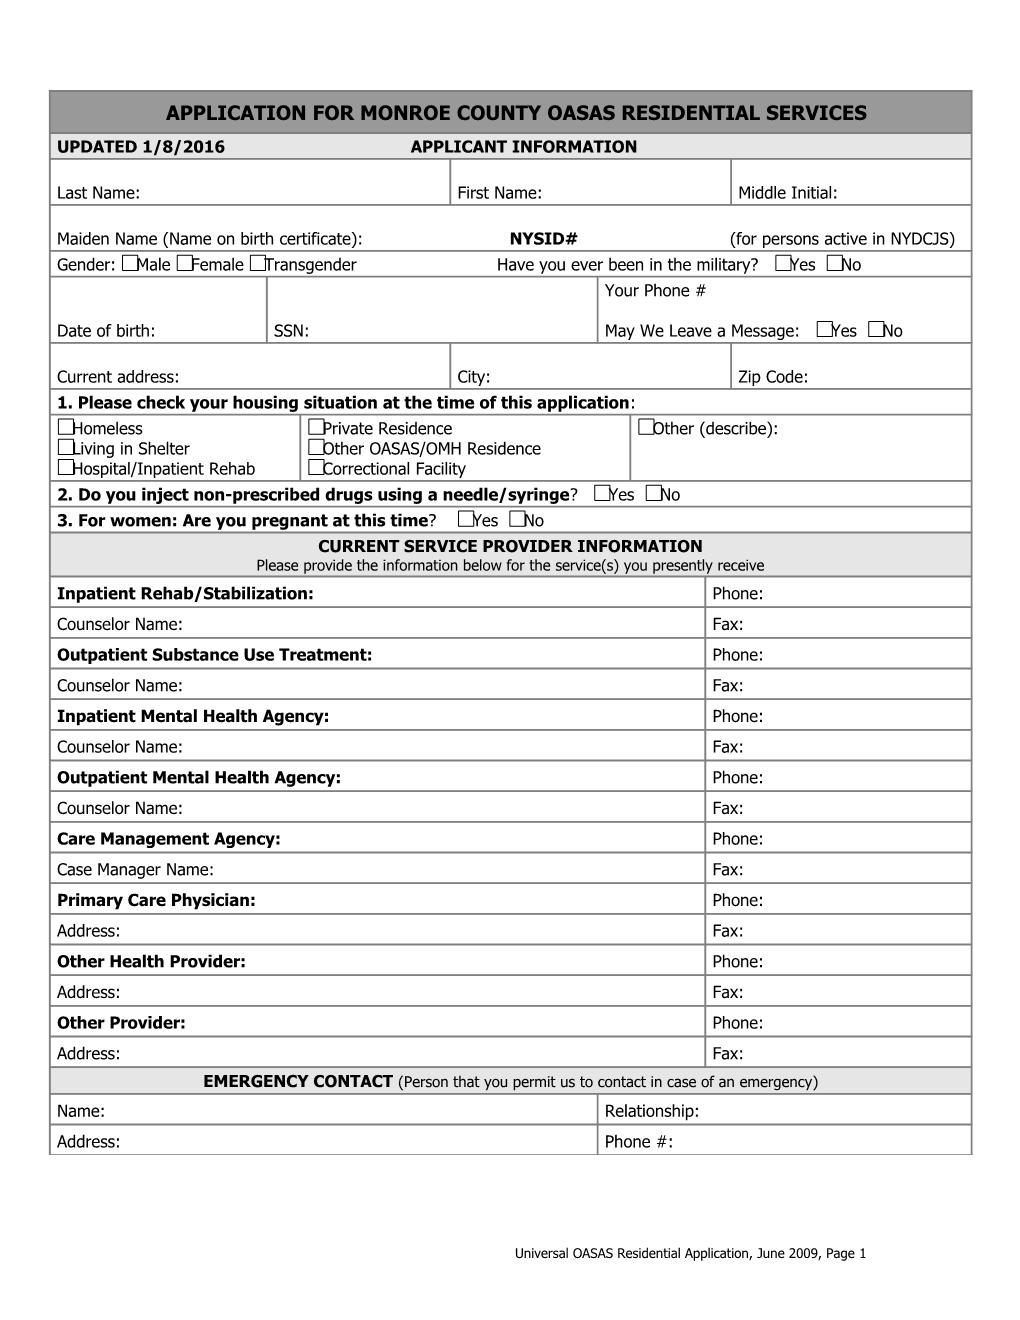 Application for Monroe County Oasas Residential Services